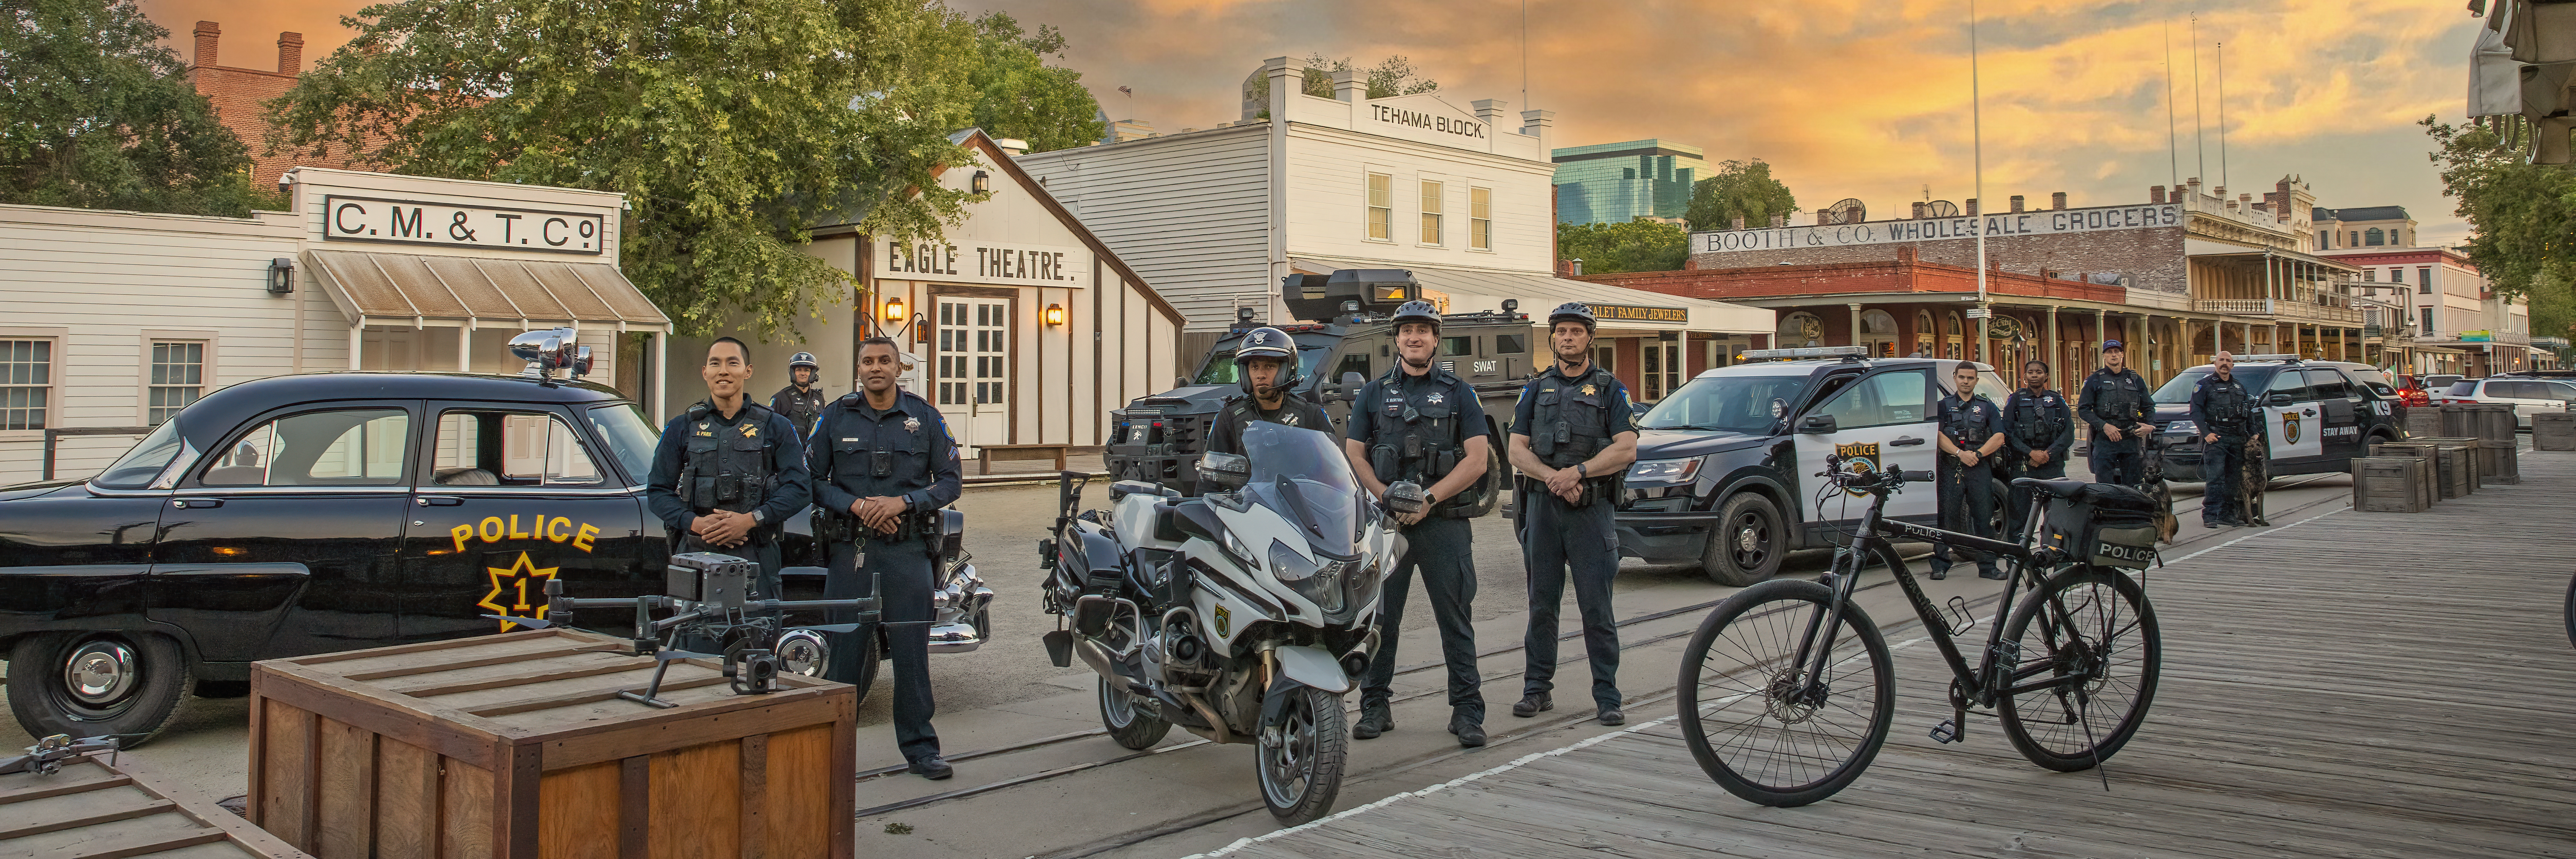 Sacramento Police Department Promotional Photo in Old Sacramento